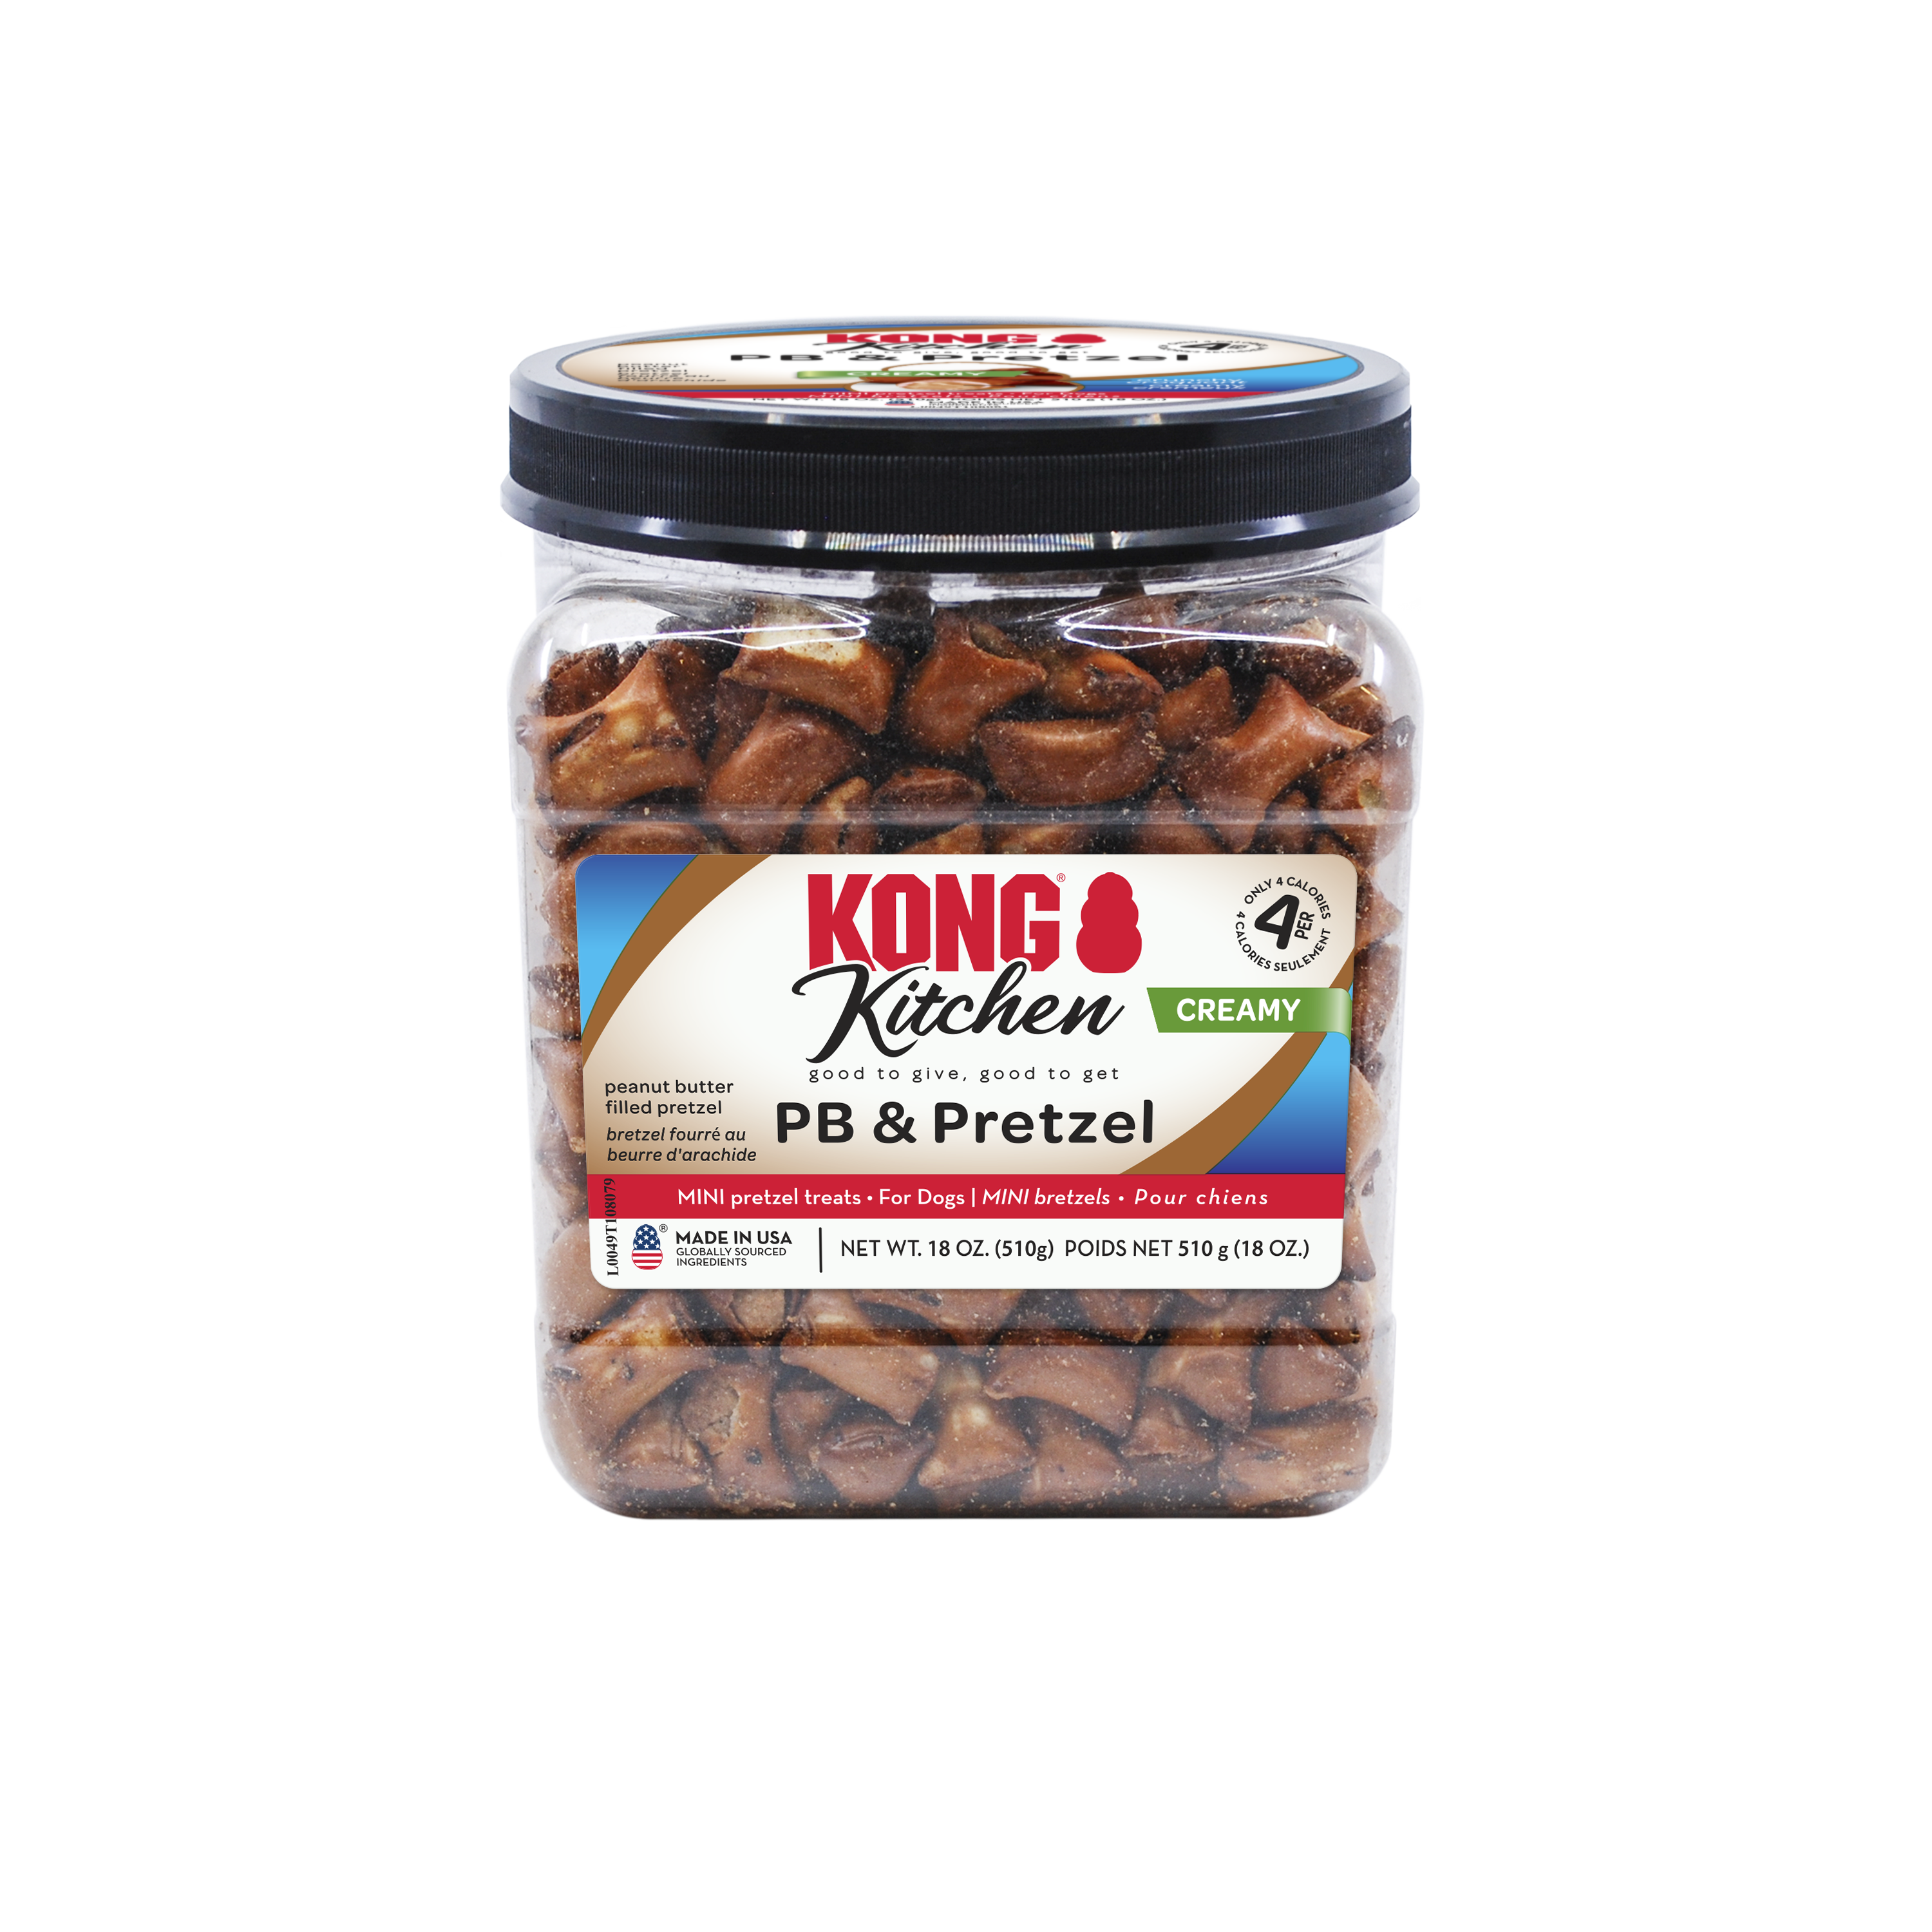 KONG Kitchen Creamy Peanut Butter & Pretzel onpack product image